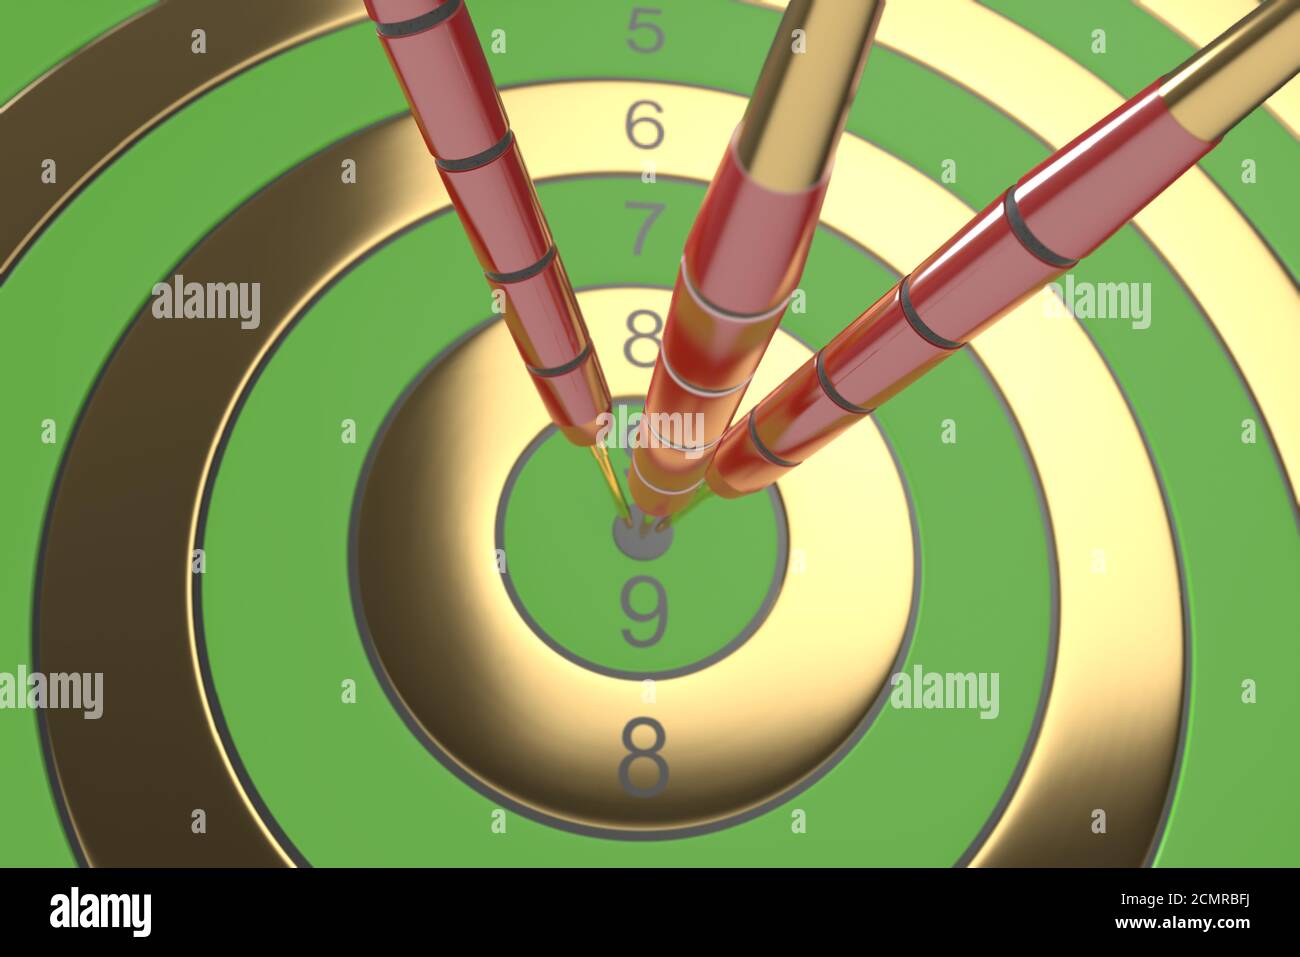 Three red darts hitting the bullseye. 3d illustration Stock Photo